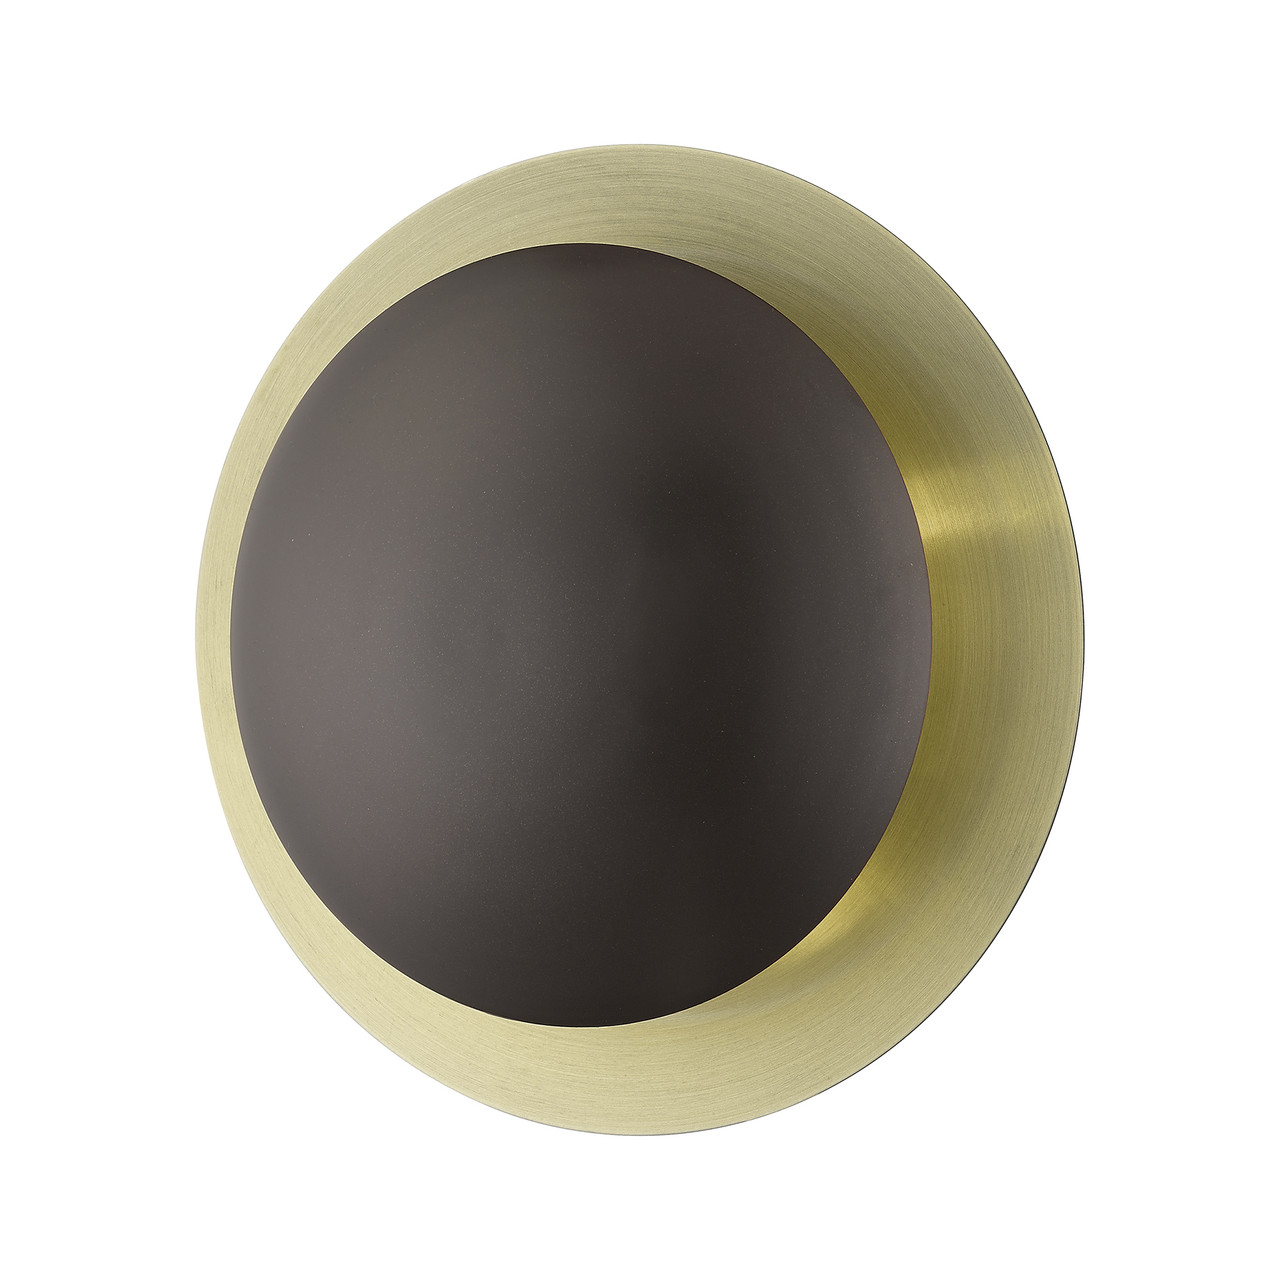 LIVEX LIGHTING 56571-92 2 Light English Bronze Medium Semi-Flush/ Wall Sconce with Antique Brass Reflector Backplate